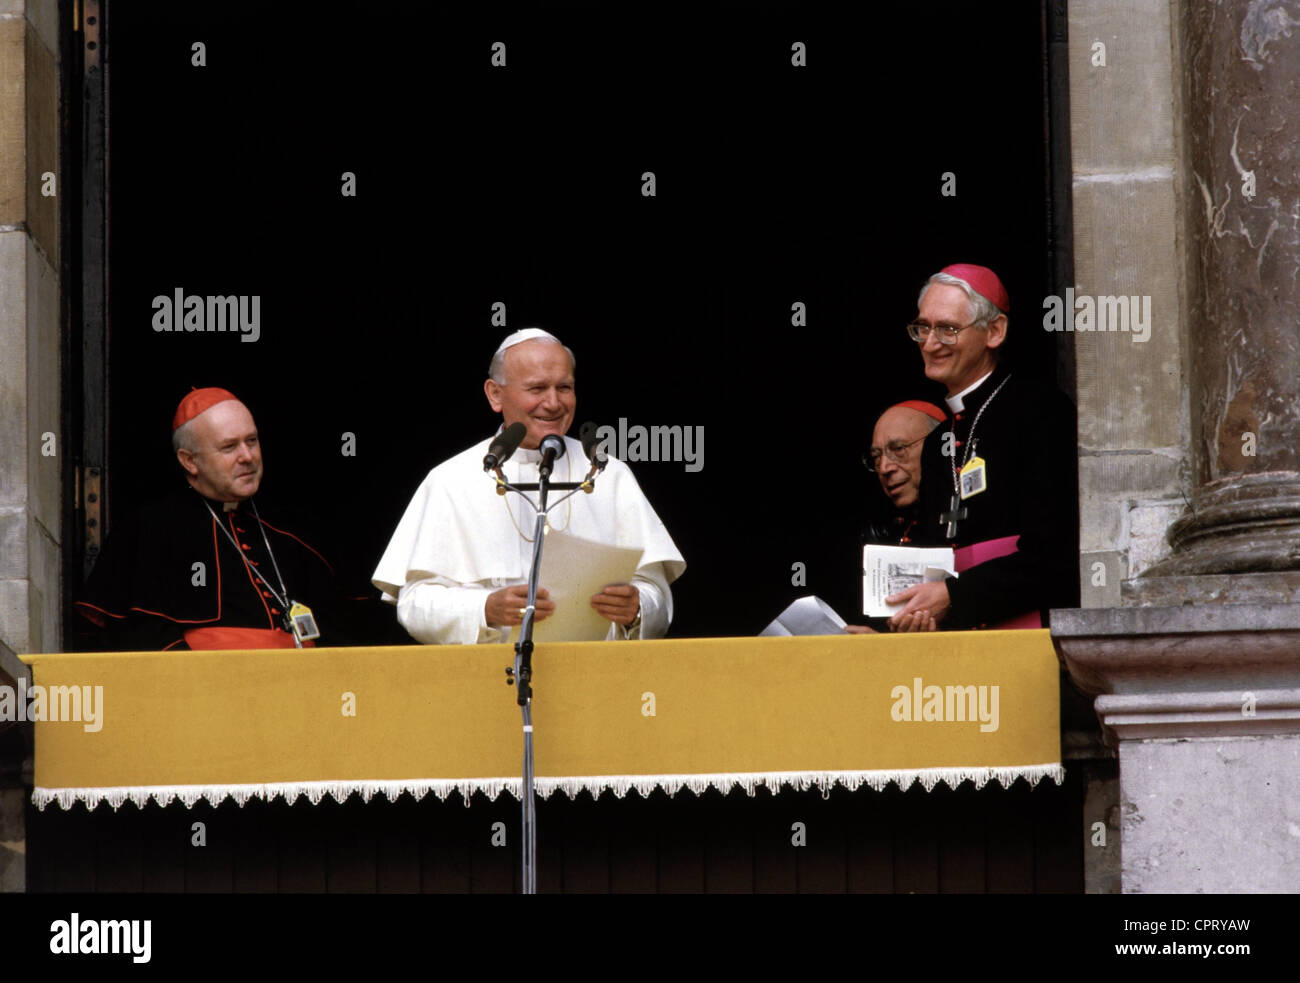 John Paul II (Karol Wojtyla), 18.5.1920 - 2.4.2005, pope 1978 - 2005, visiting the Benelux countries, 11. - 21.5.1985, half length, in Antwerp, 17.5.1985, giving a speech, with Cardinal Danneels and Cardinal Casaroli, Stock Photo